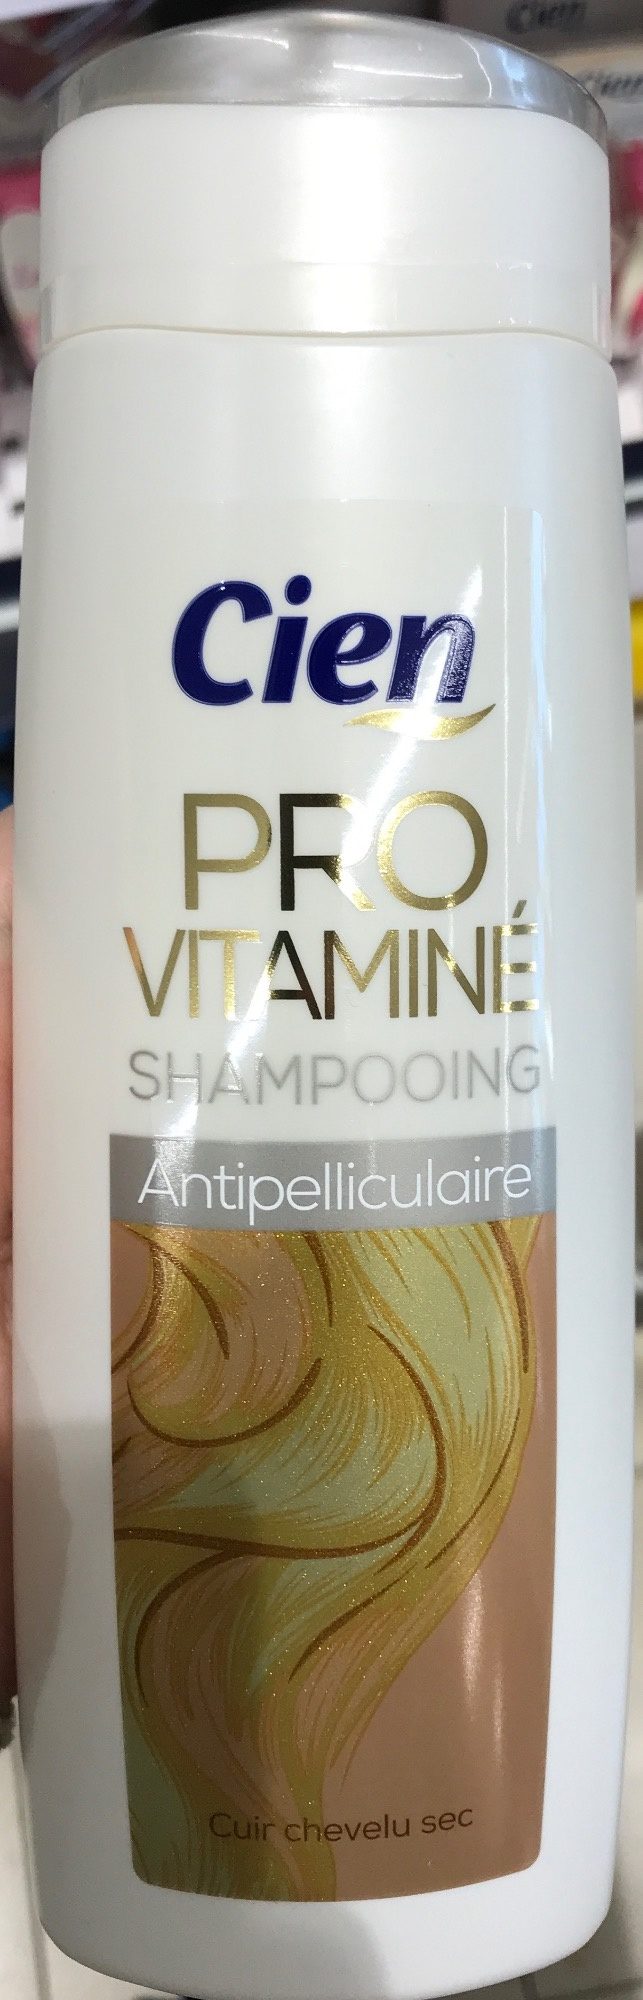 Provitaminé Shampooing Antipelliculaire - Produto - fr